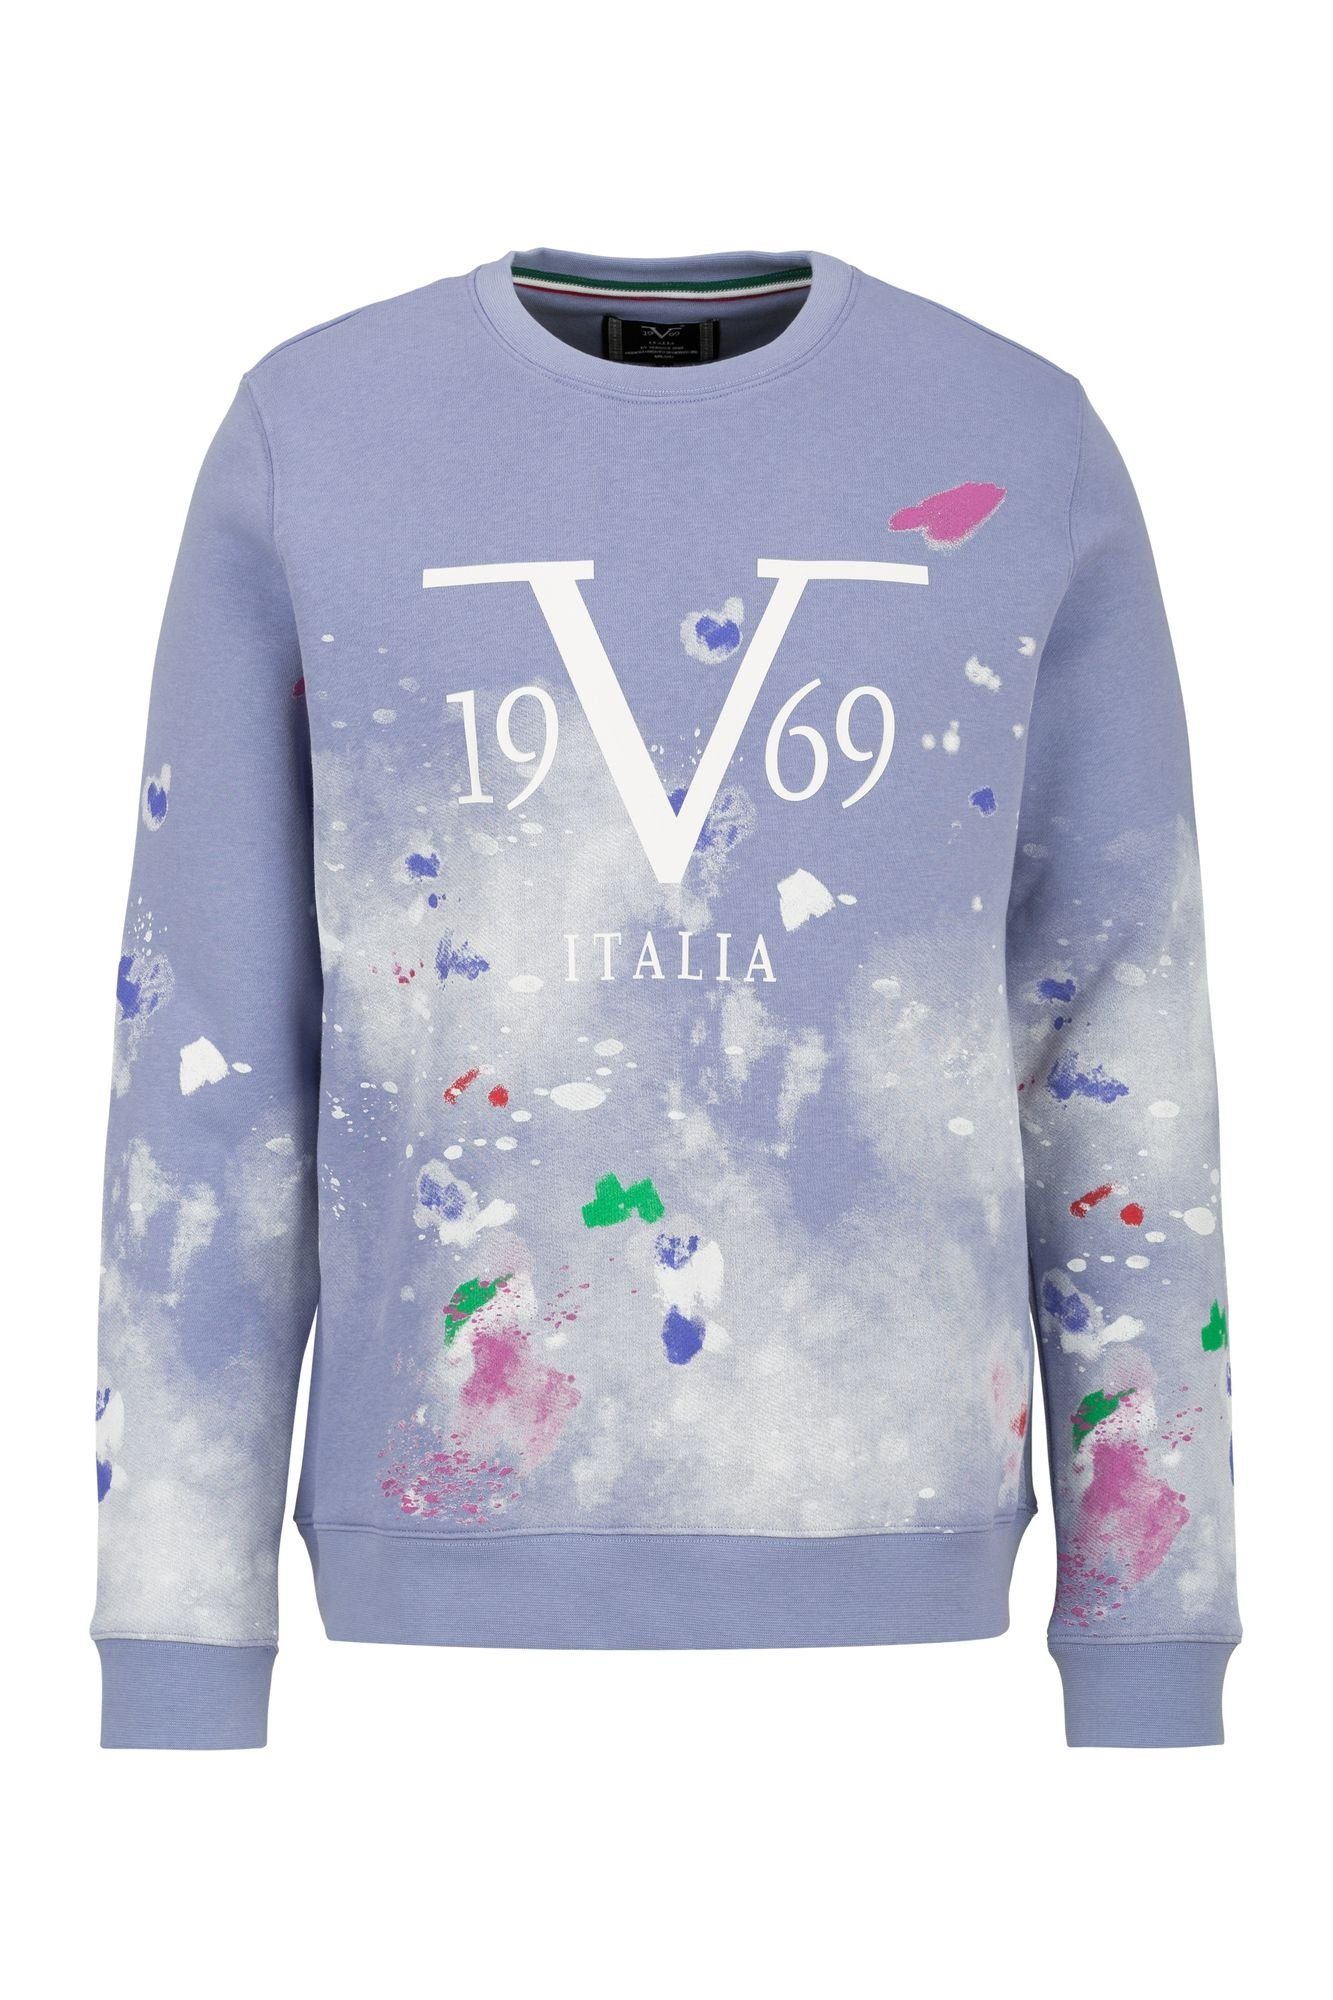 Versace 19V69 Sweatshirt - by Versace Italia by SRL Luan Sportivo